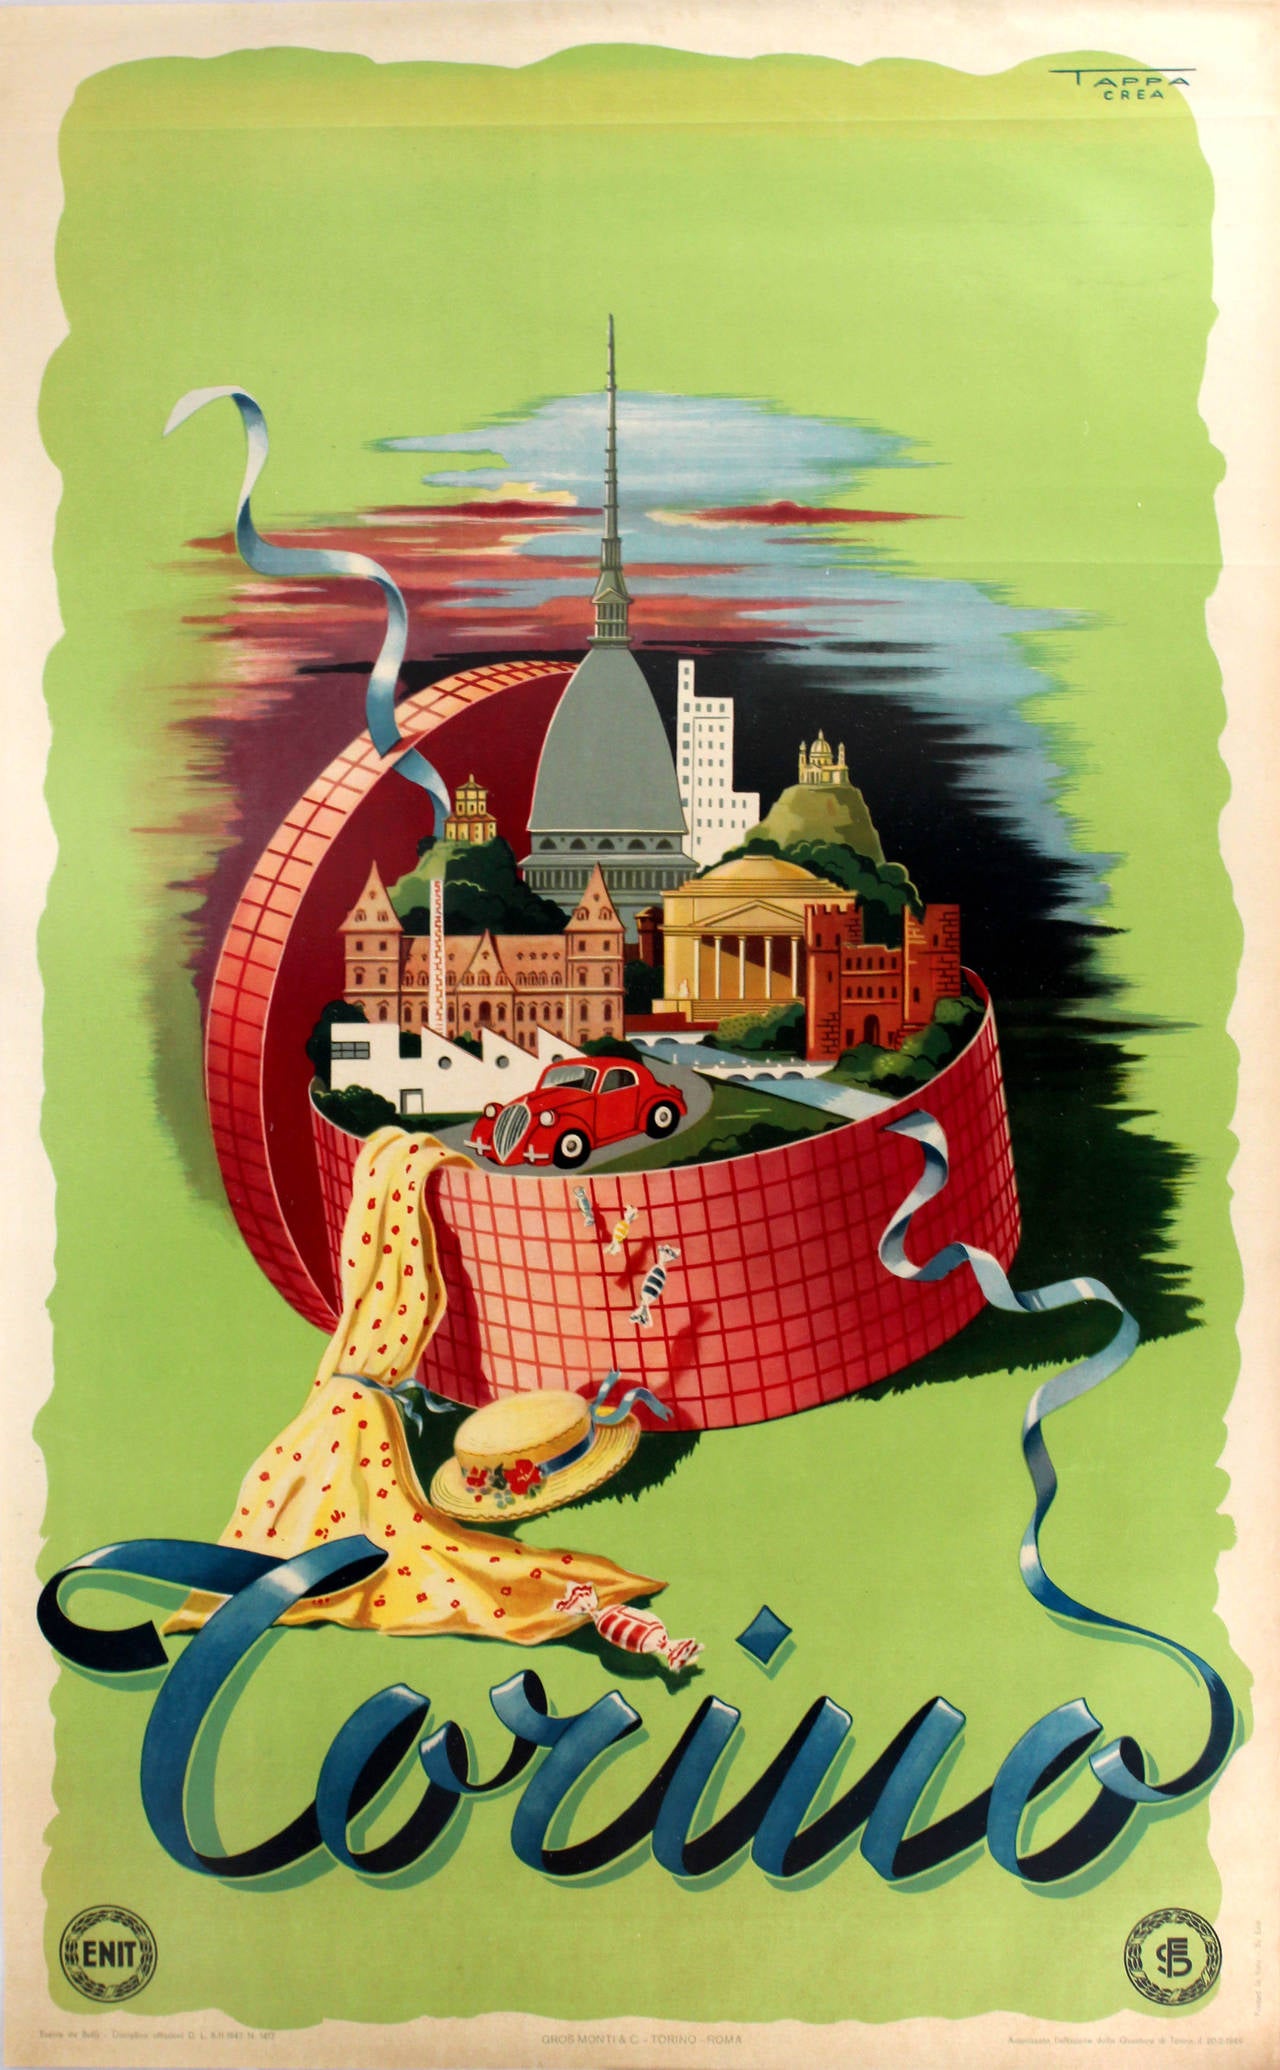 Tappa Crea Print - Original Vintage ENIT Travel Advertising Poster For Torino - Turin - Italy